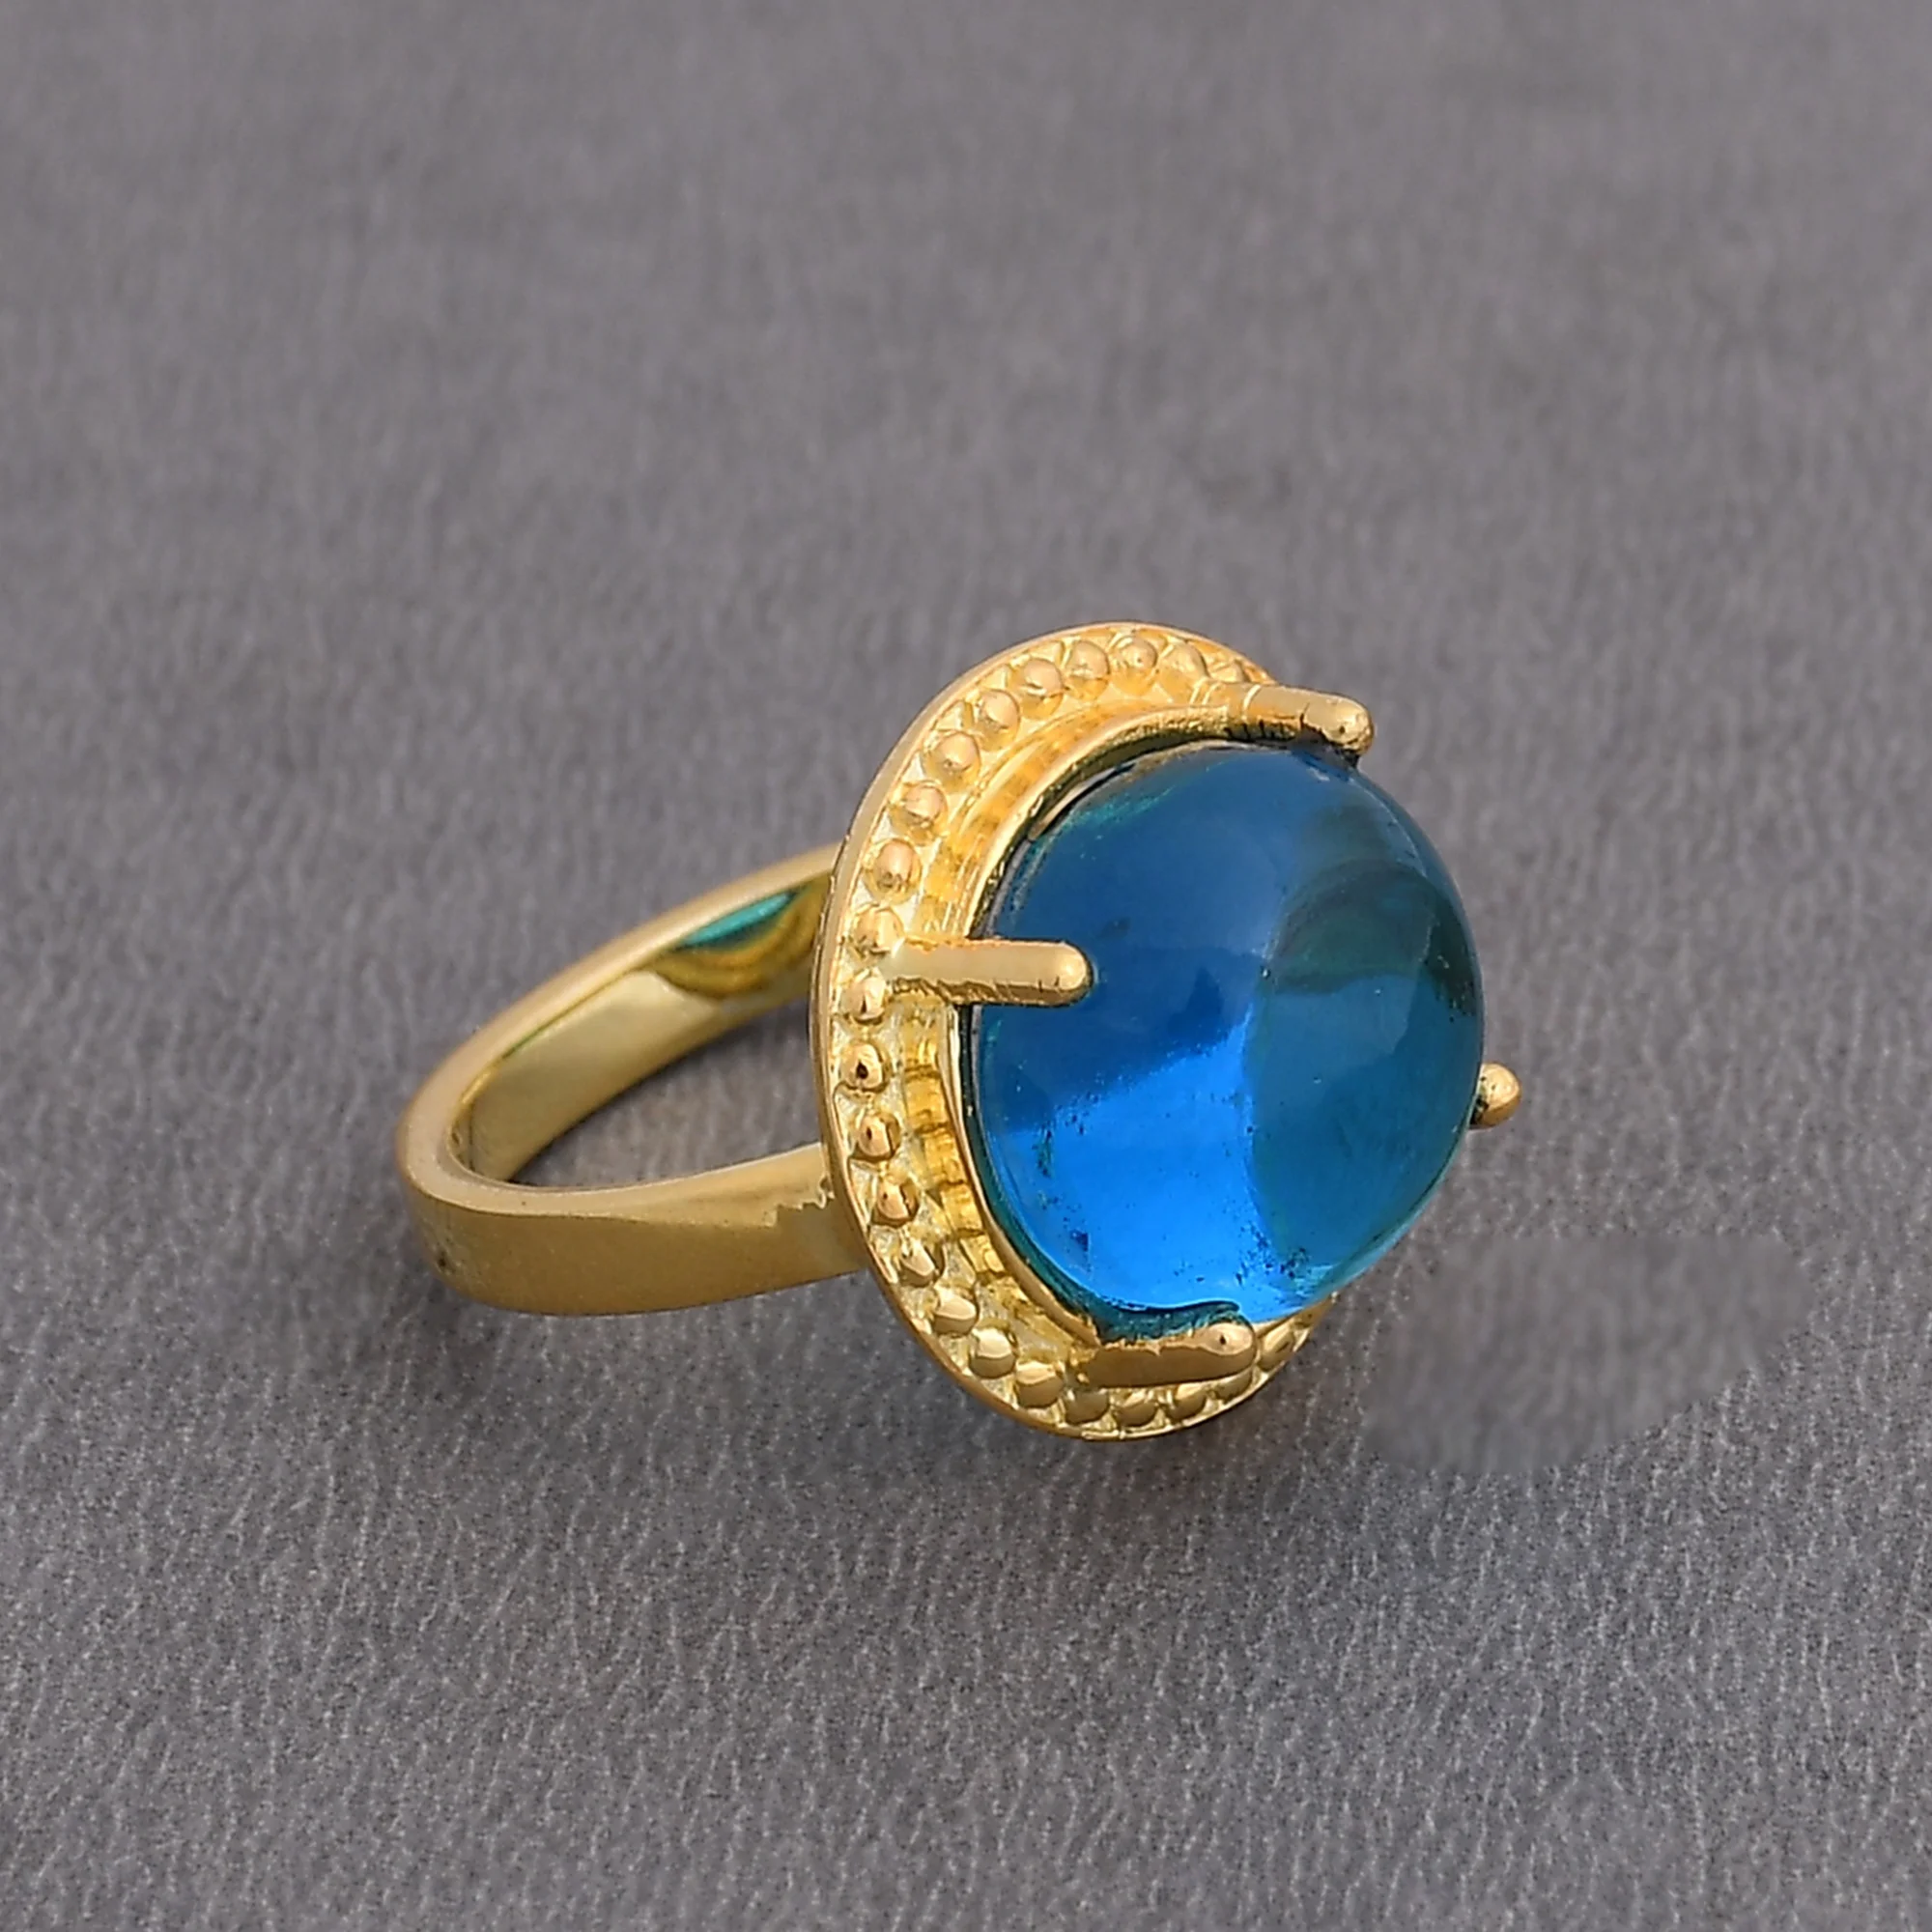 Gold Plated Classic Design Blue Hydro Quartz Prong Set Designer Wedding Ring Gift For Women